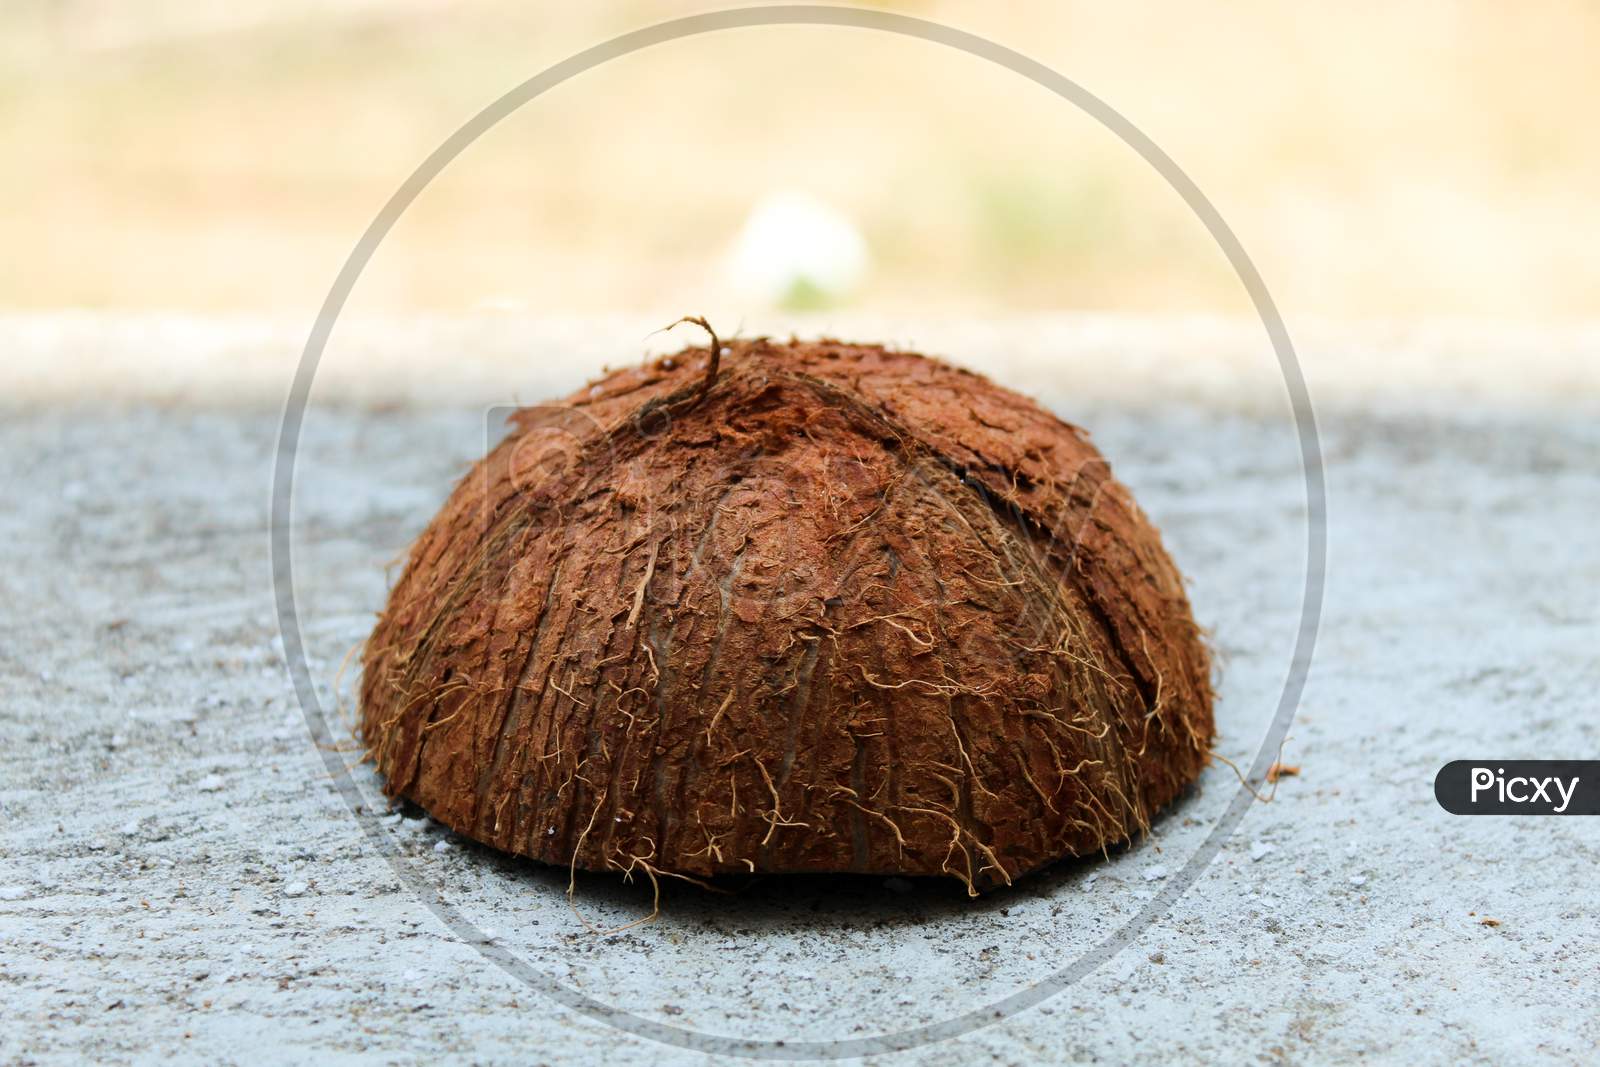 Coconut Shell Cut In Half